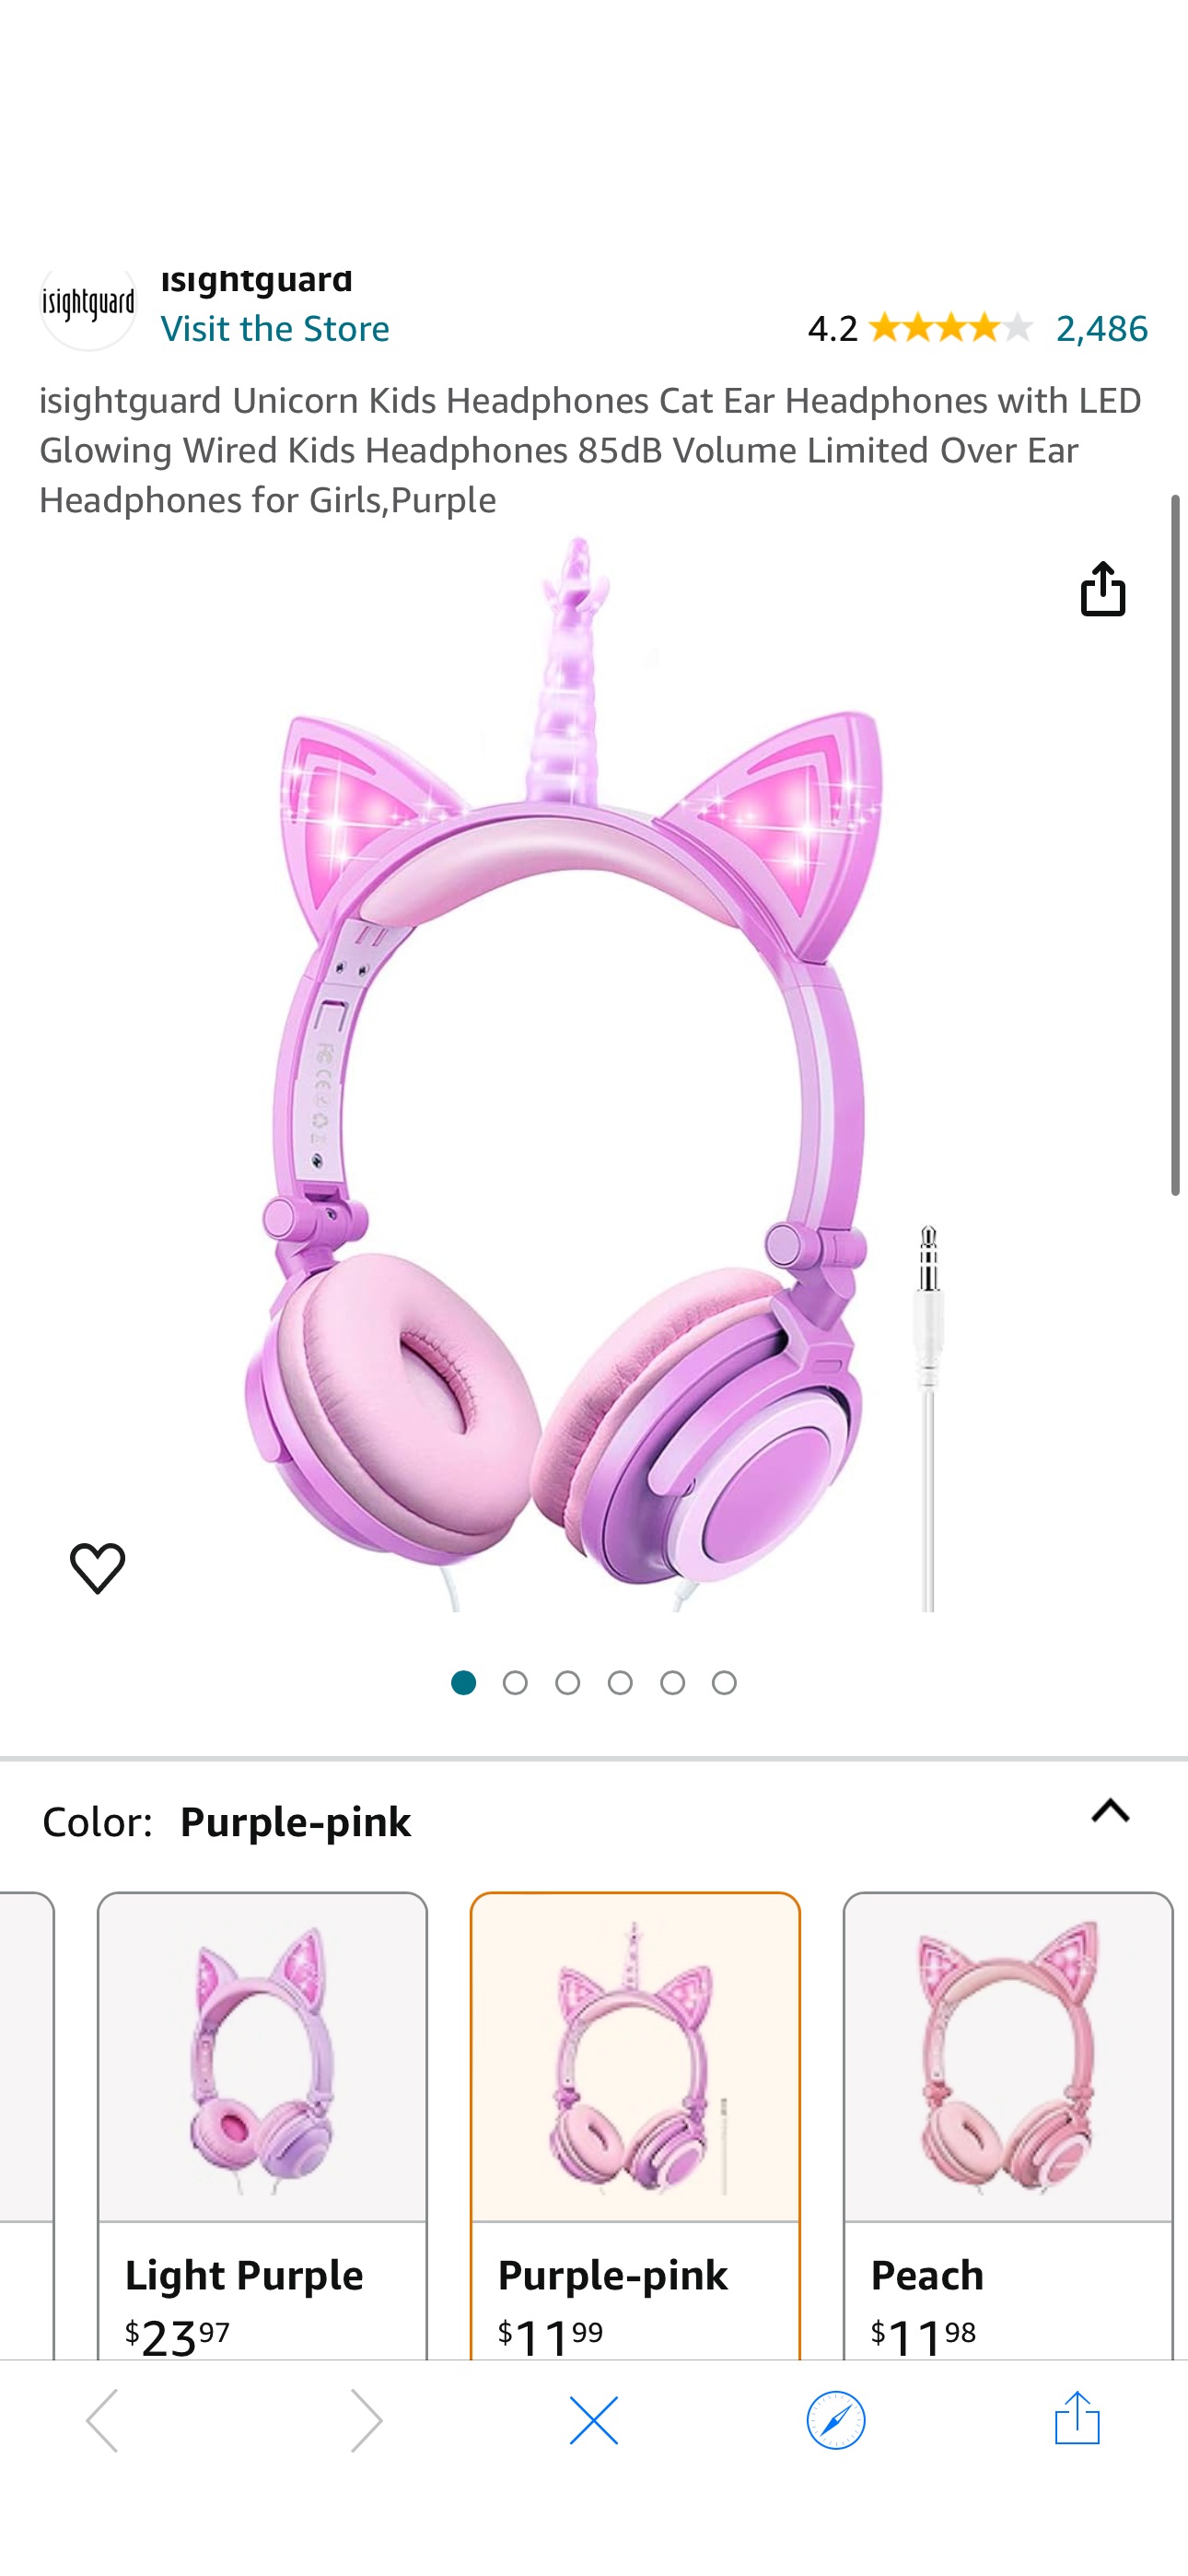 Amazon.com: isightguard Unicorn Kids Headphones Cat Ear Headphones with LED Glowing Wired Kids Headphones 85dB Volume Limited Over Ear Headphones for Girls,Purple : Electronics